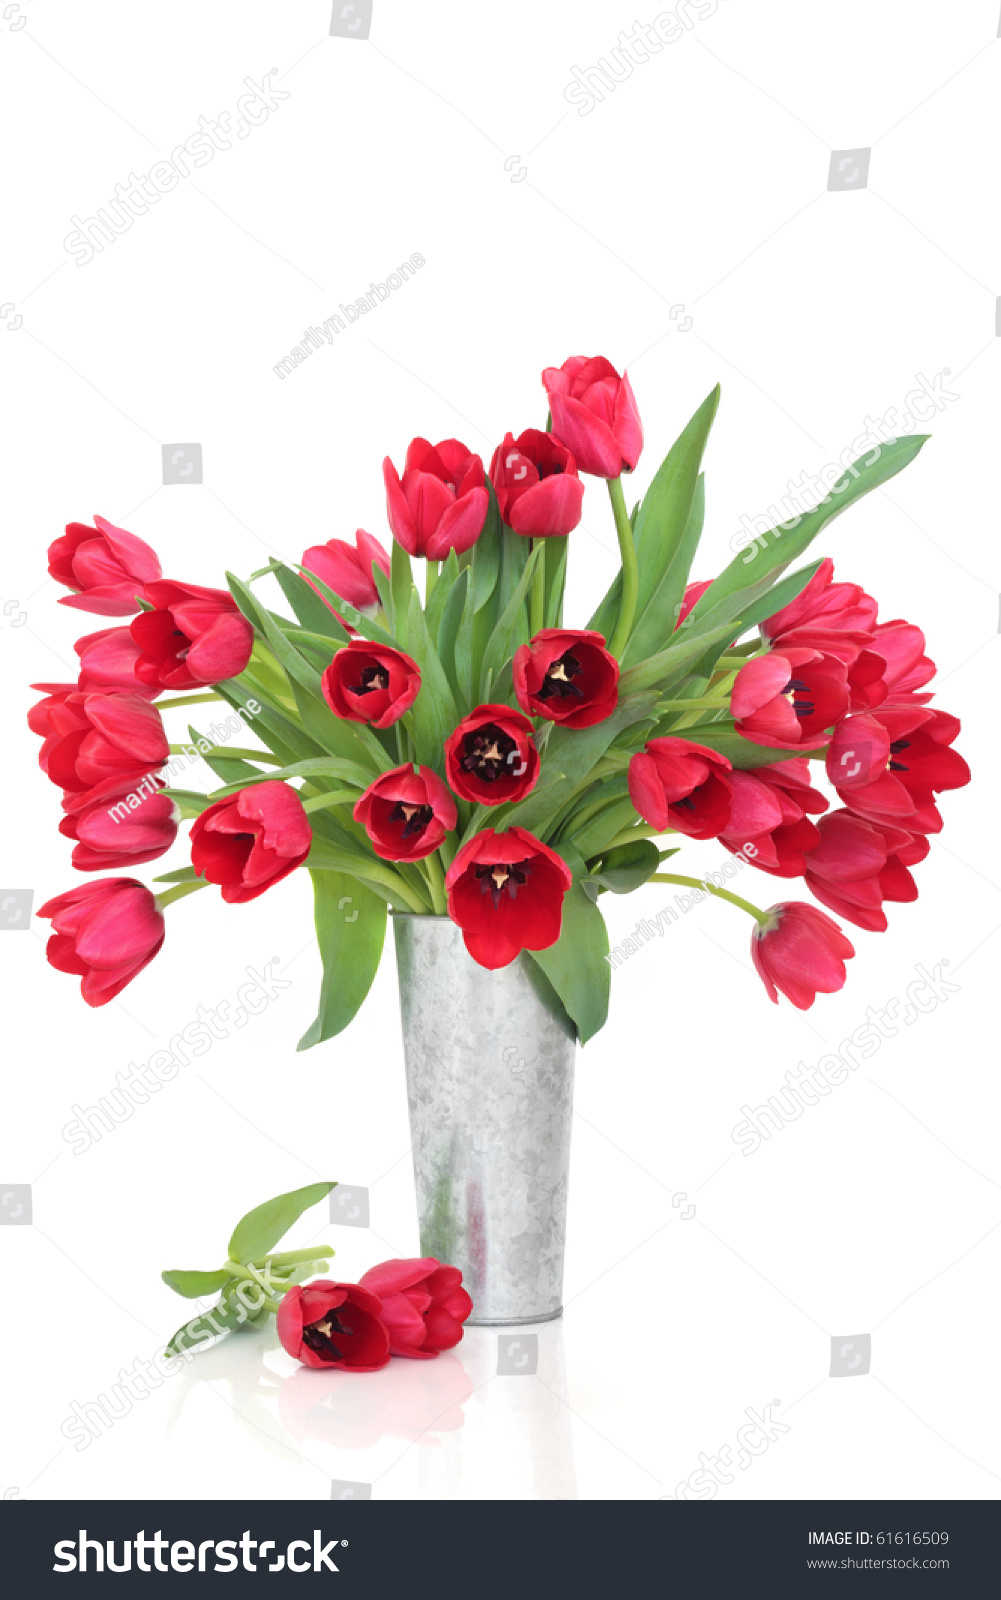 Red Tulip Flower Arrangement Distressed Aluminum Stock Photo 61616509  Shutterstock